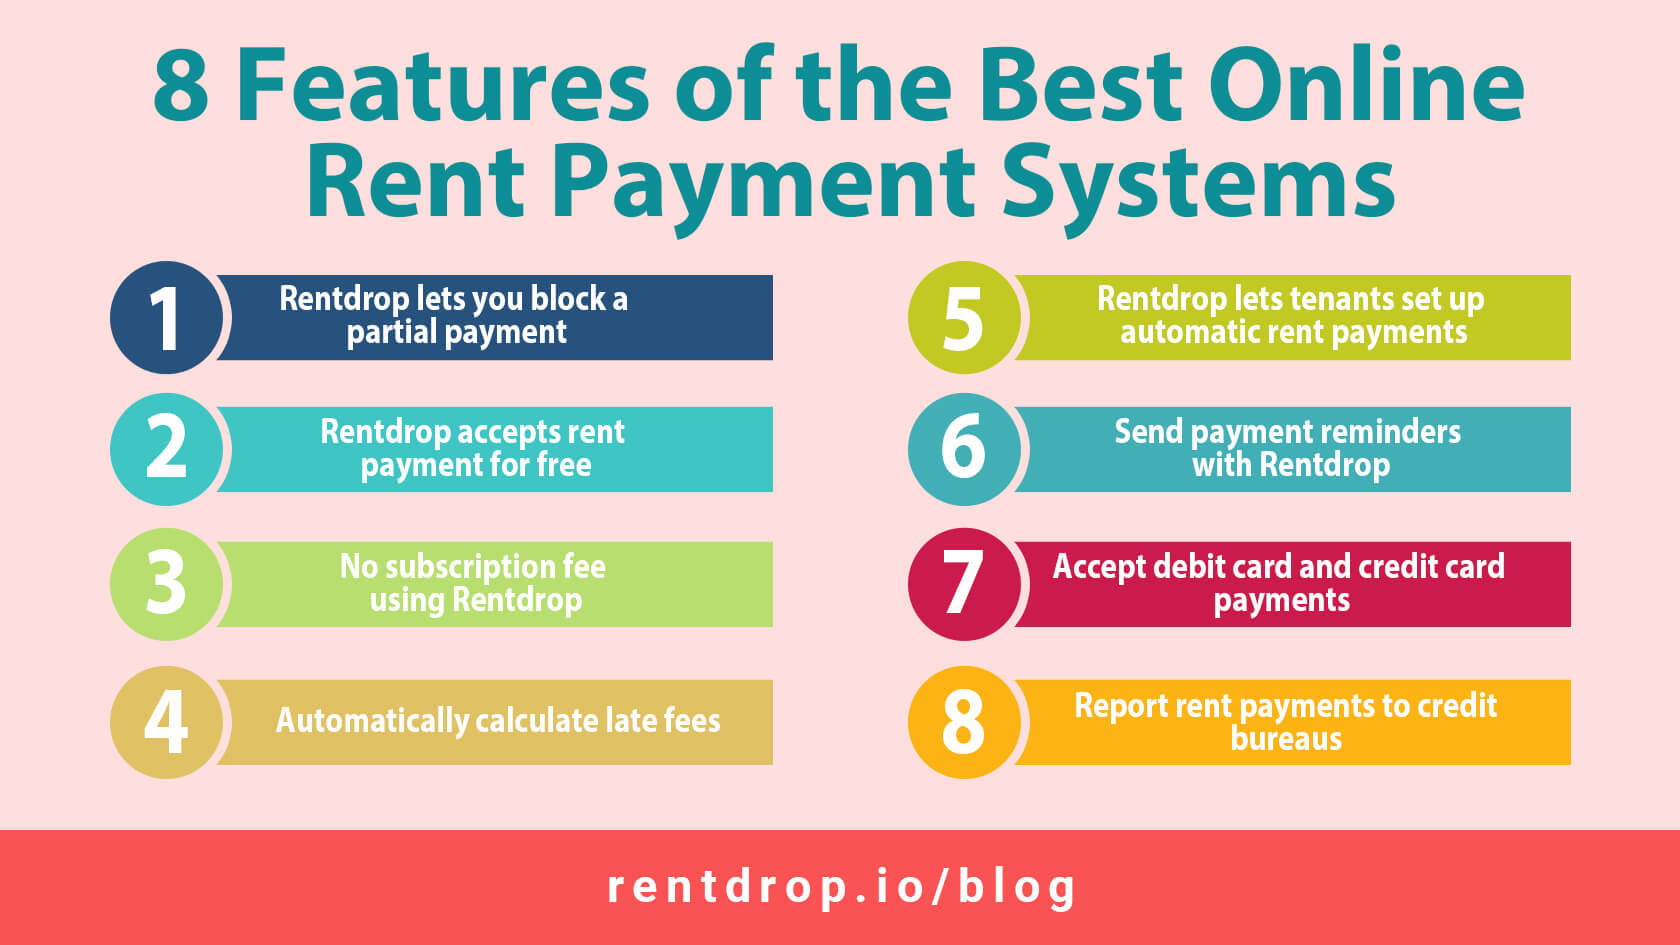 online rent payment systems asset rentdrop